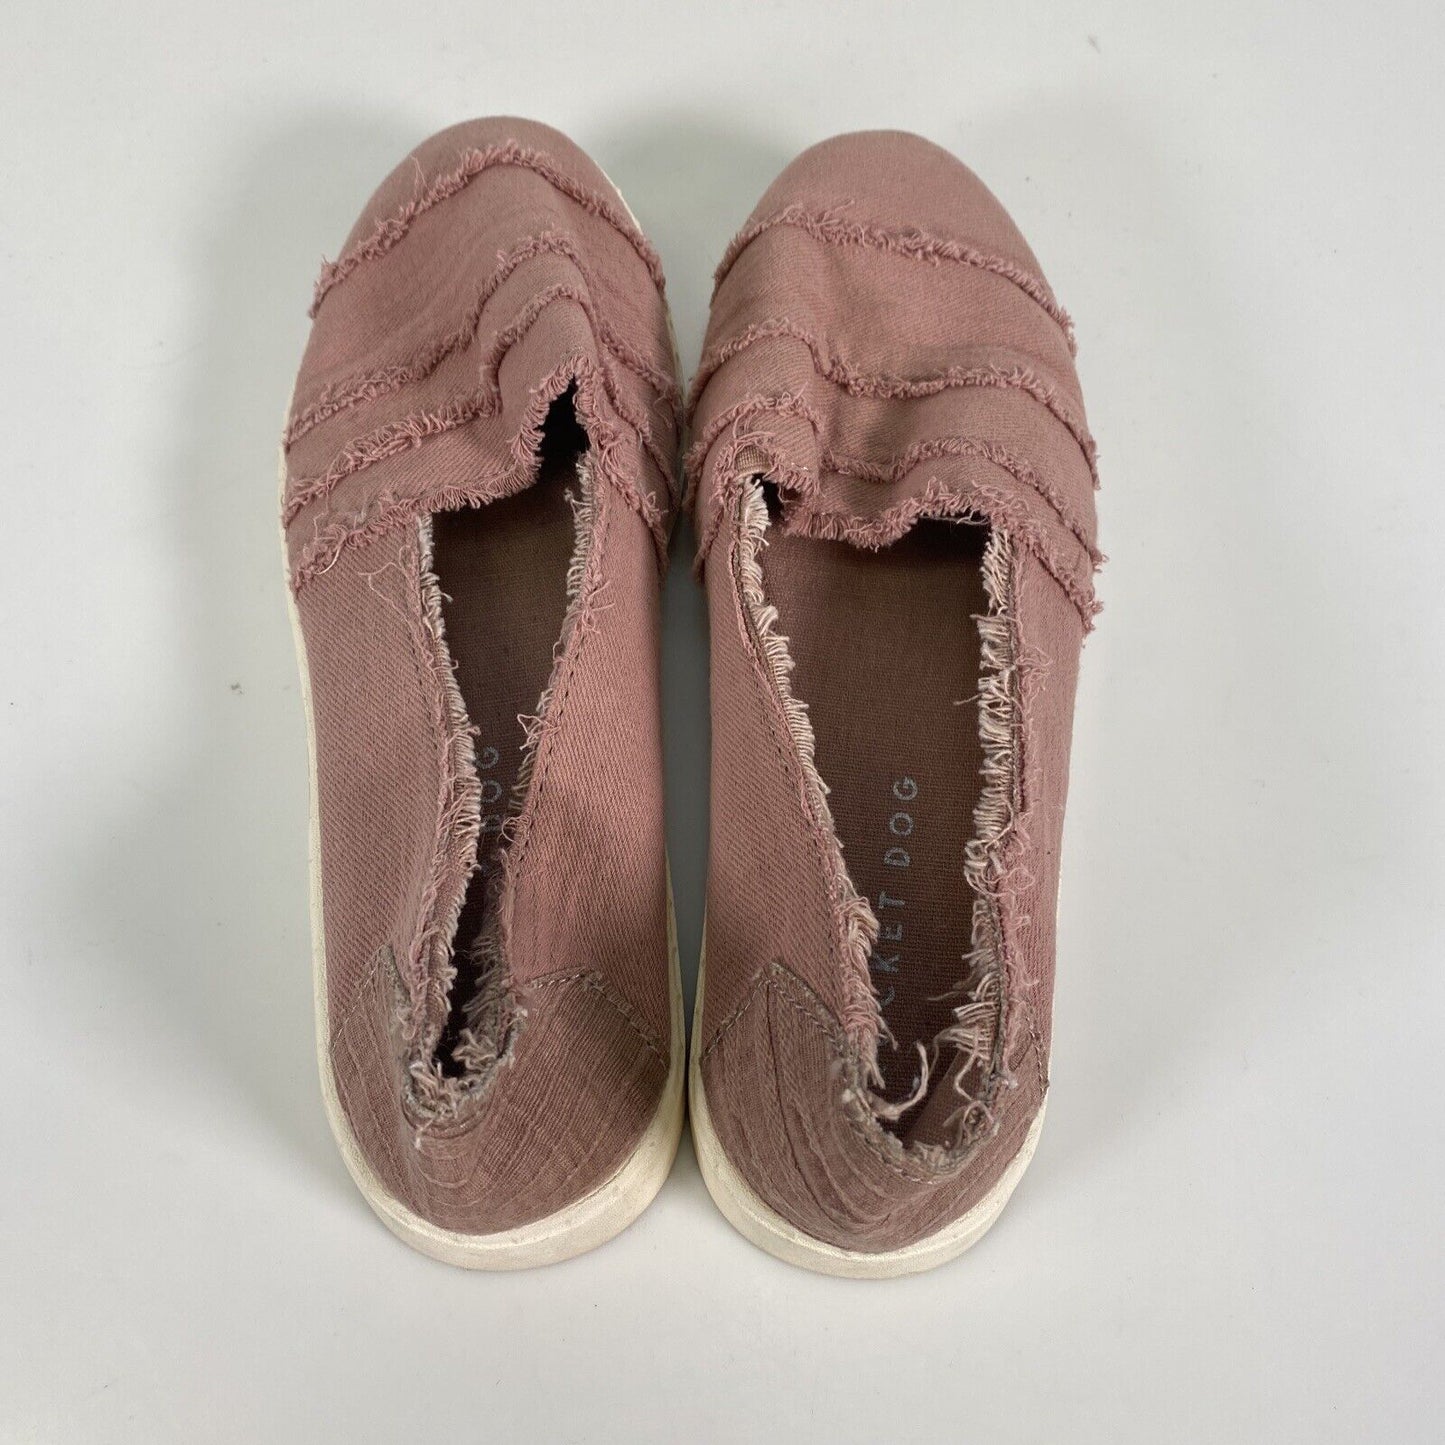 Rocket Dog Women's Pink Fabric Slip On Casual Flats Shoes Sz 6